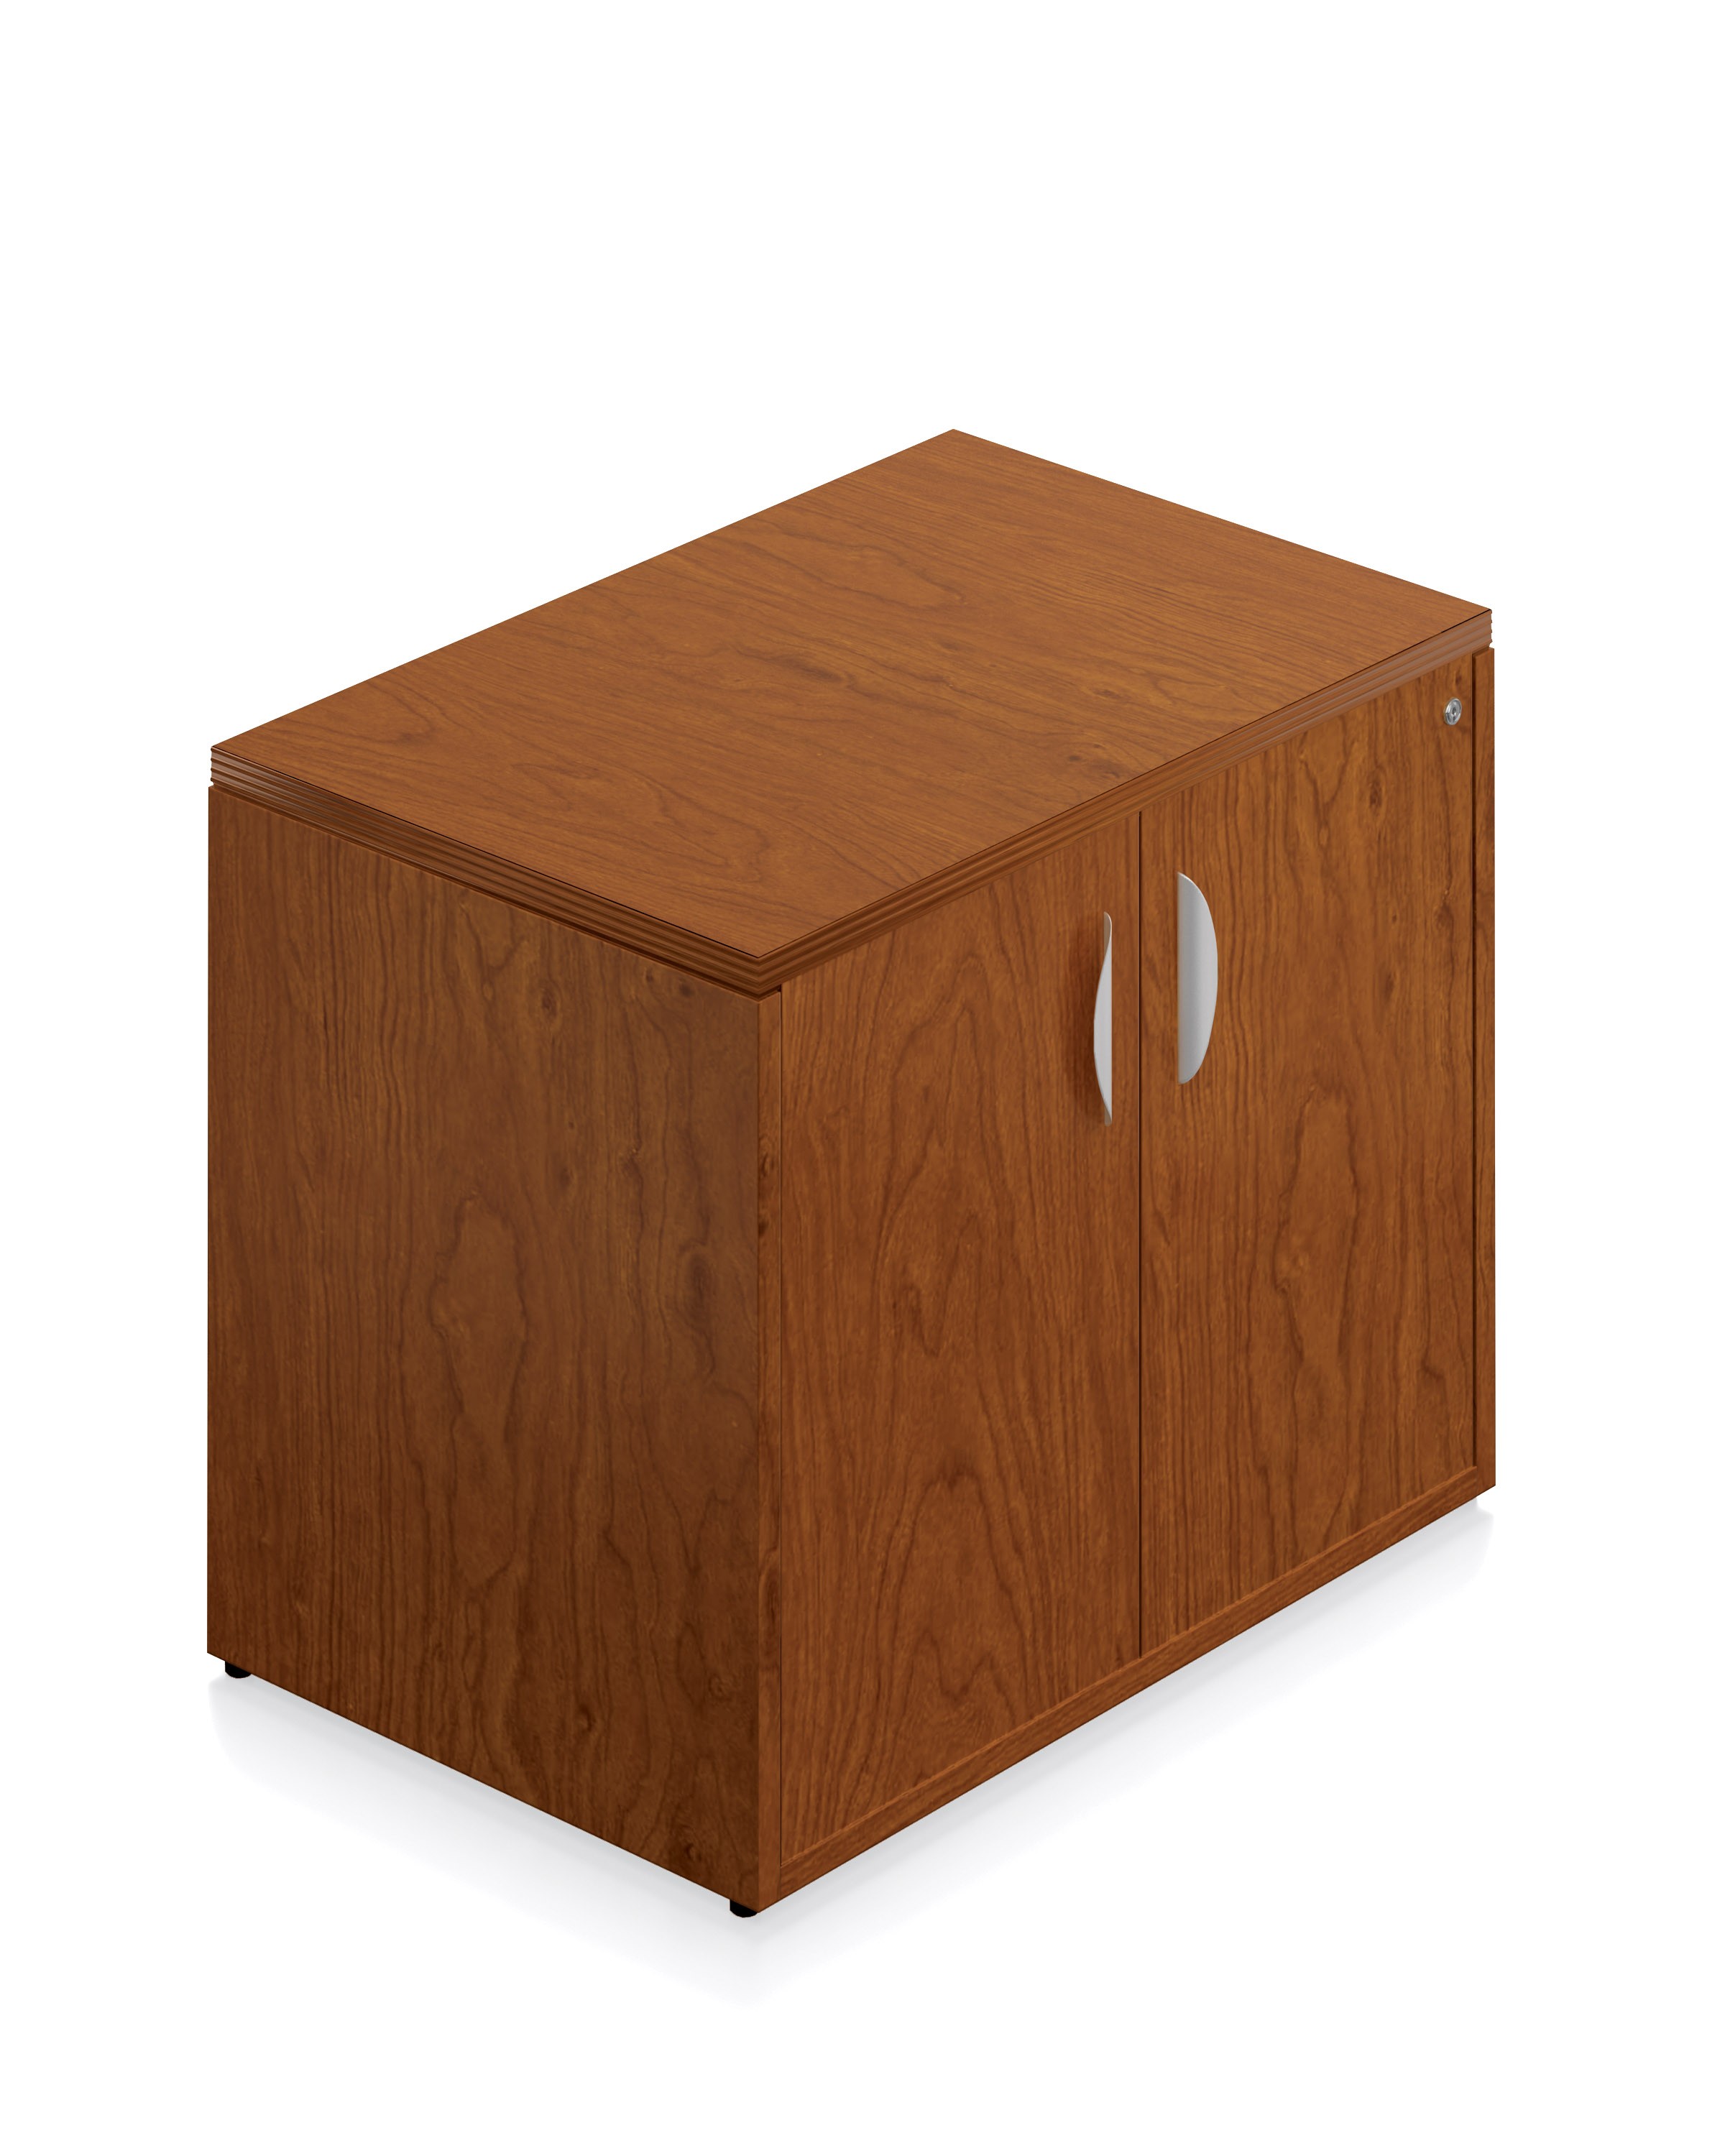 Ventnor Wood Veneer Storage Cabinet